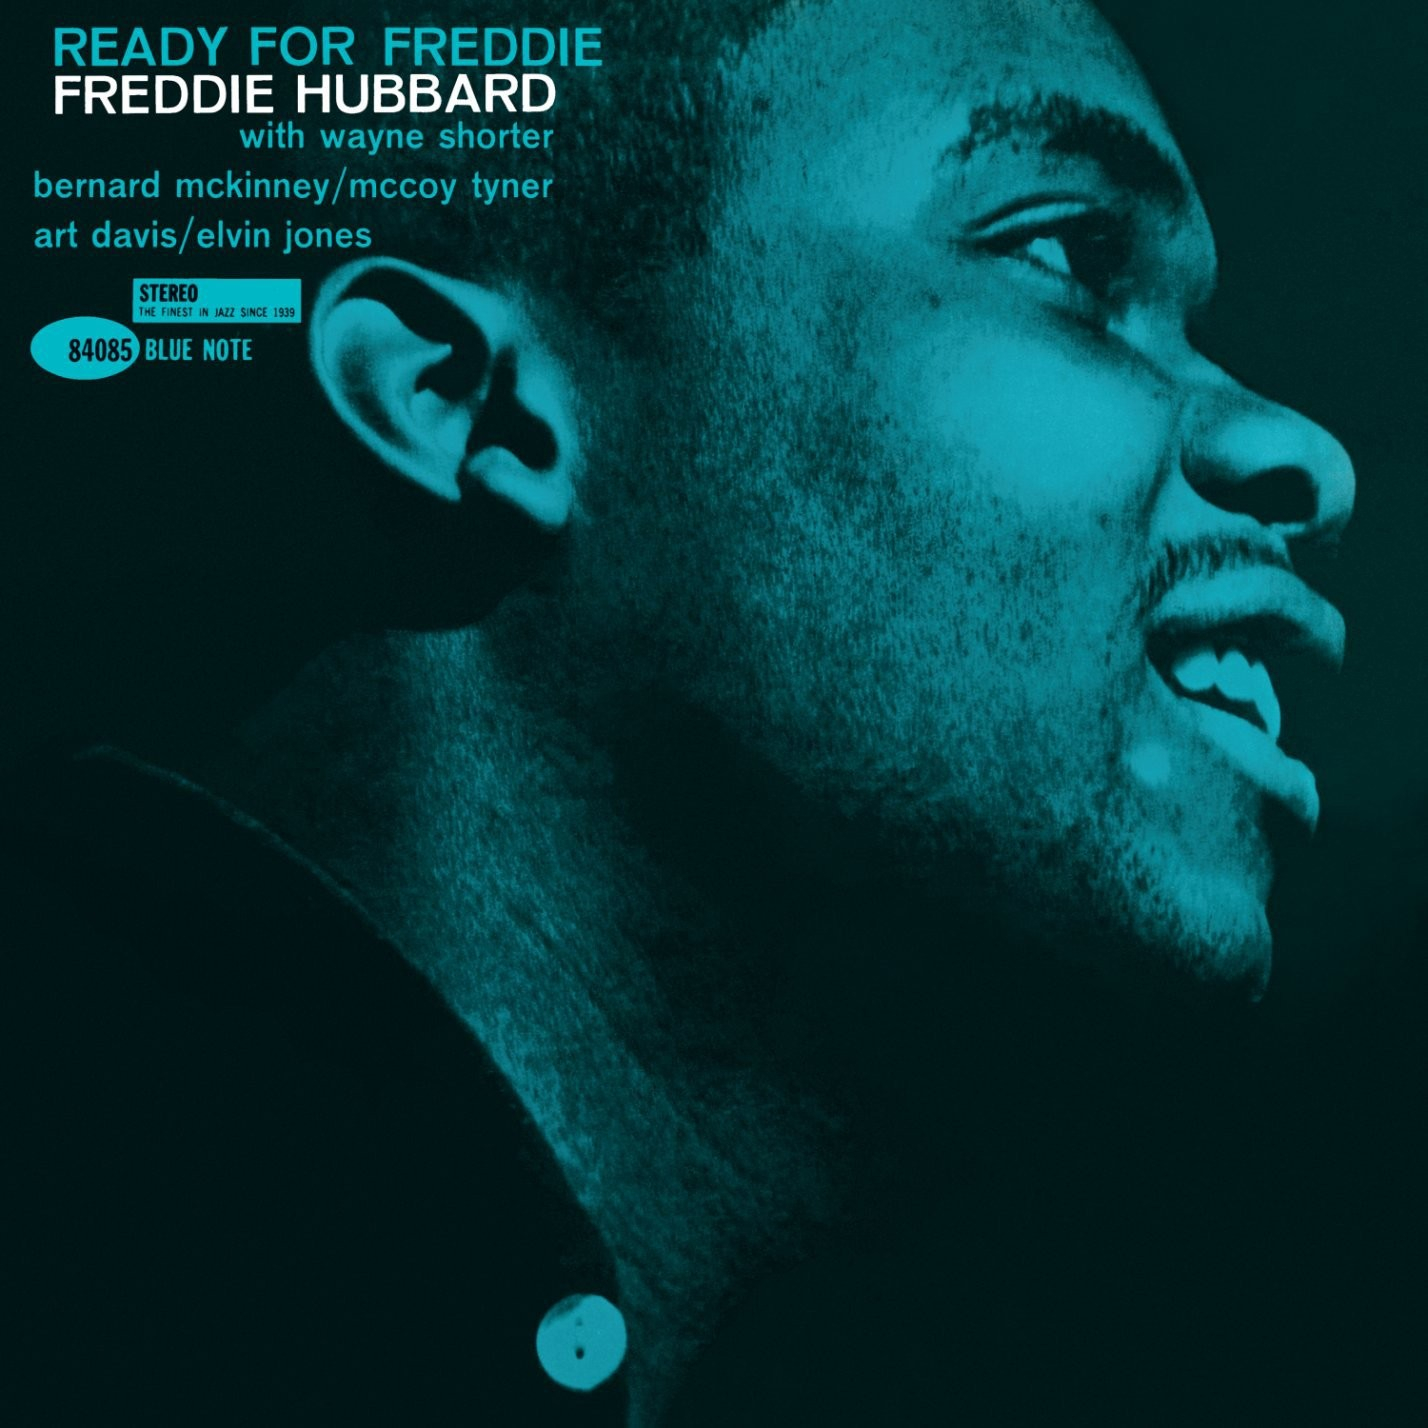 HUBBARD FREDDIE - READY FOR FREDDIE, Vinyl